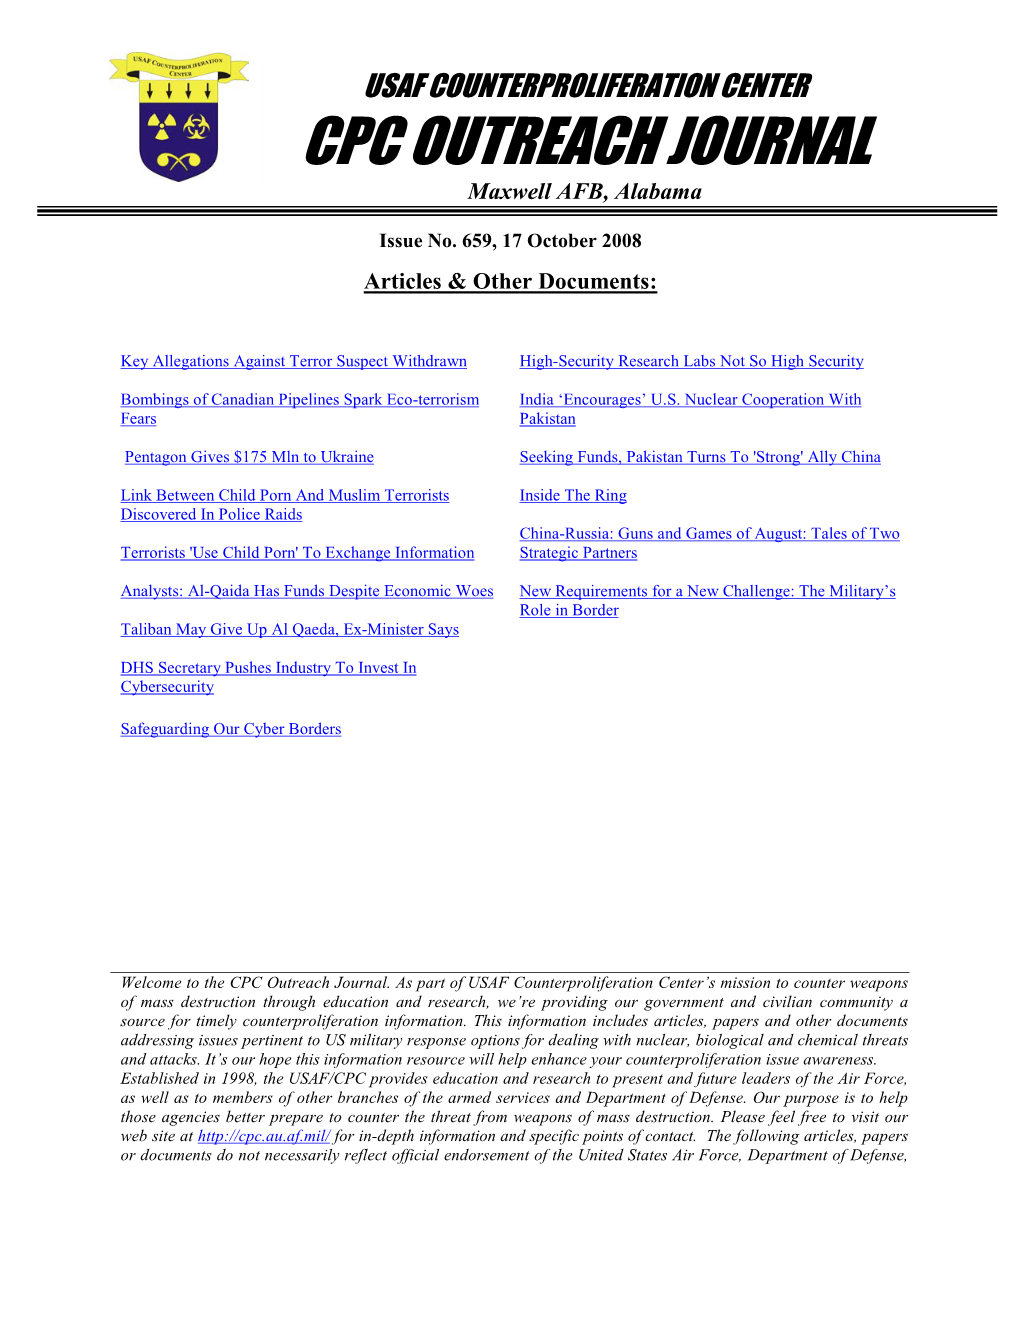 USAF Counterproliferation Center CPC Outreach Journal #659